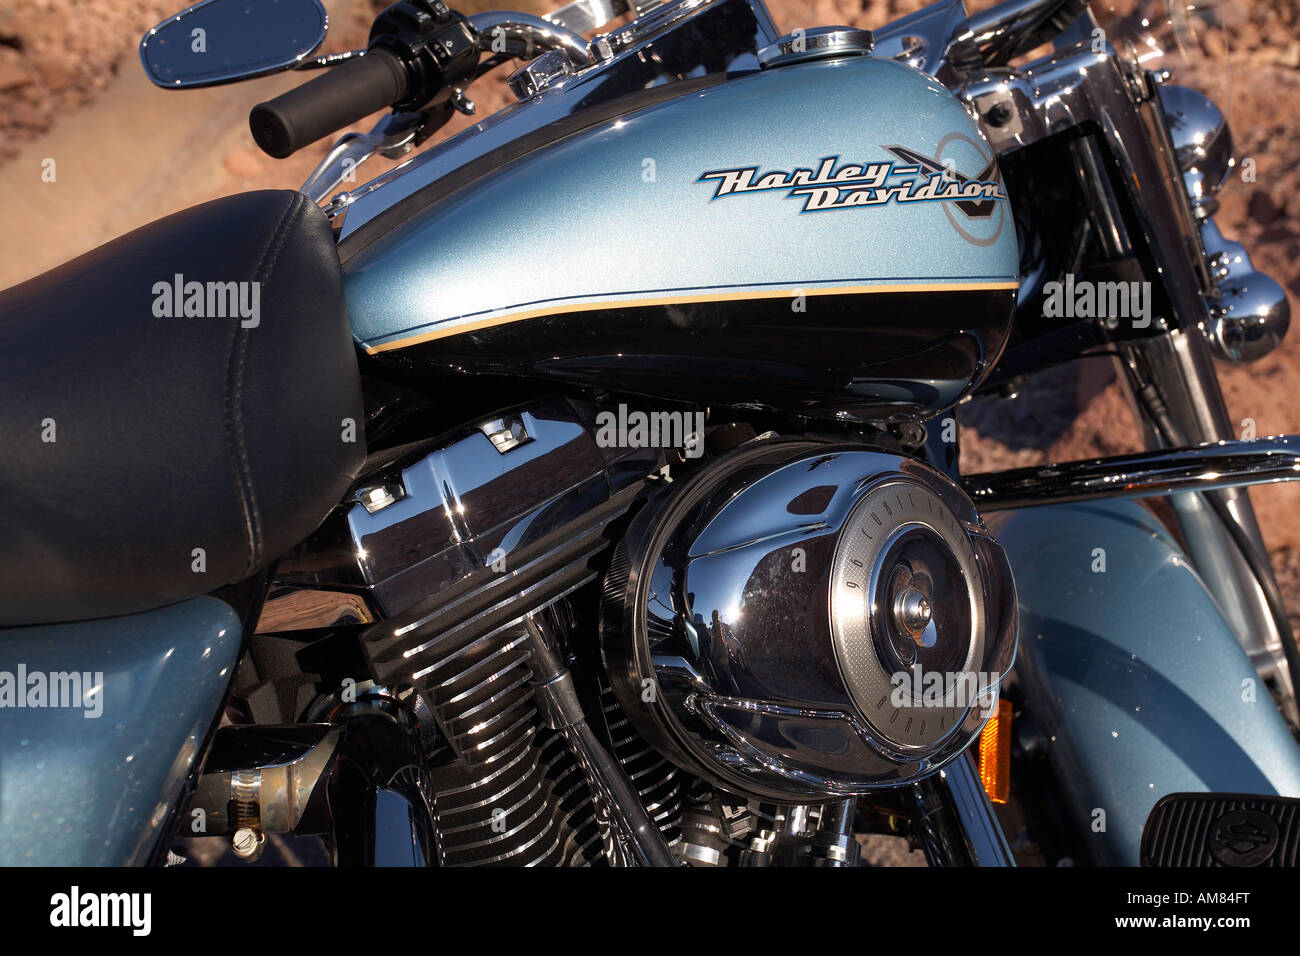 Stati Uniti, Nevada, Las Vegas, Harley Davidson Moto Foto Stock